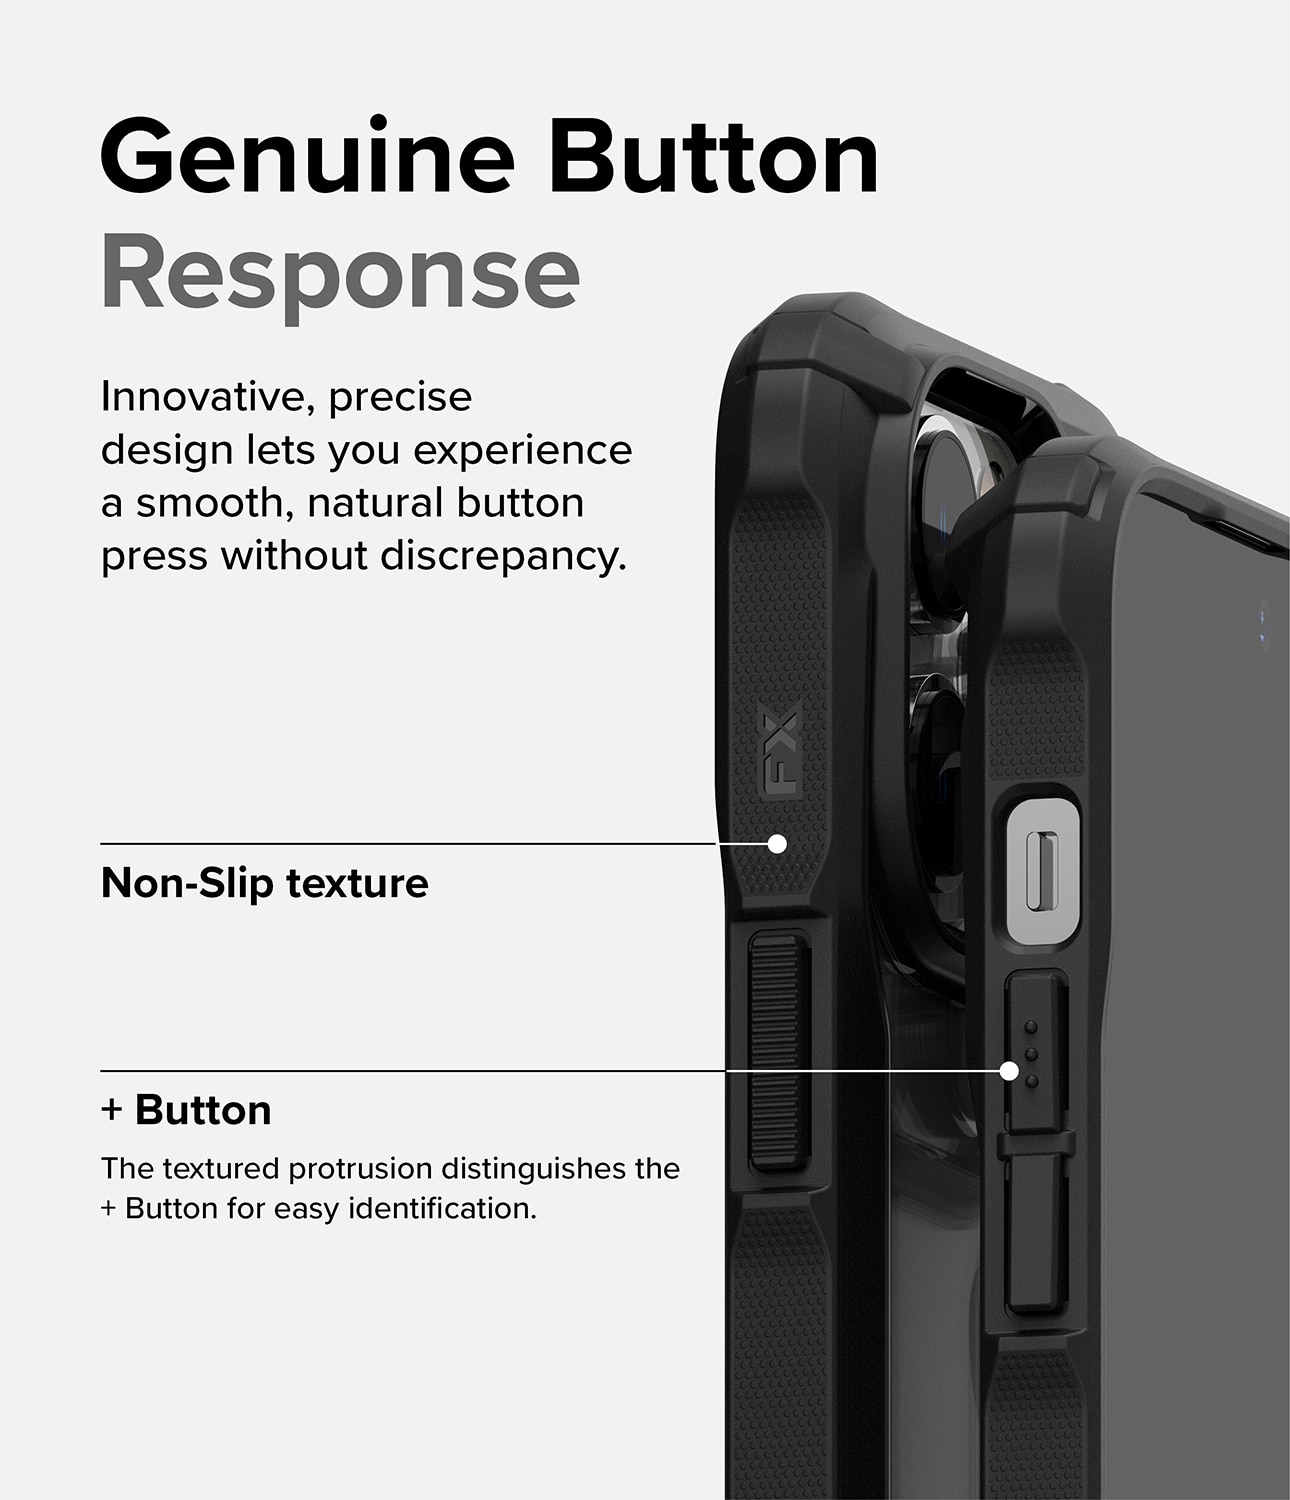 Fusion X Case iPhone 14 Pro Max Black